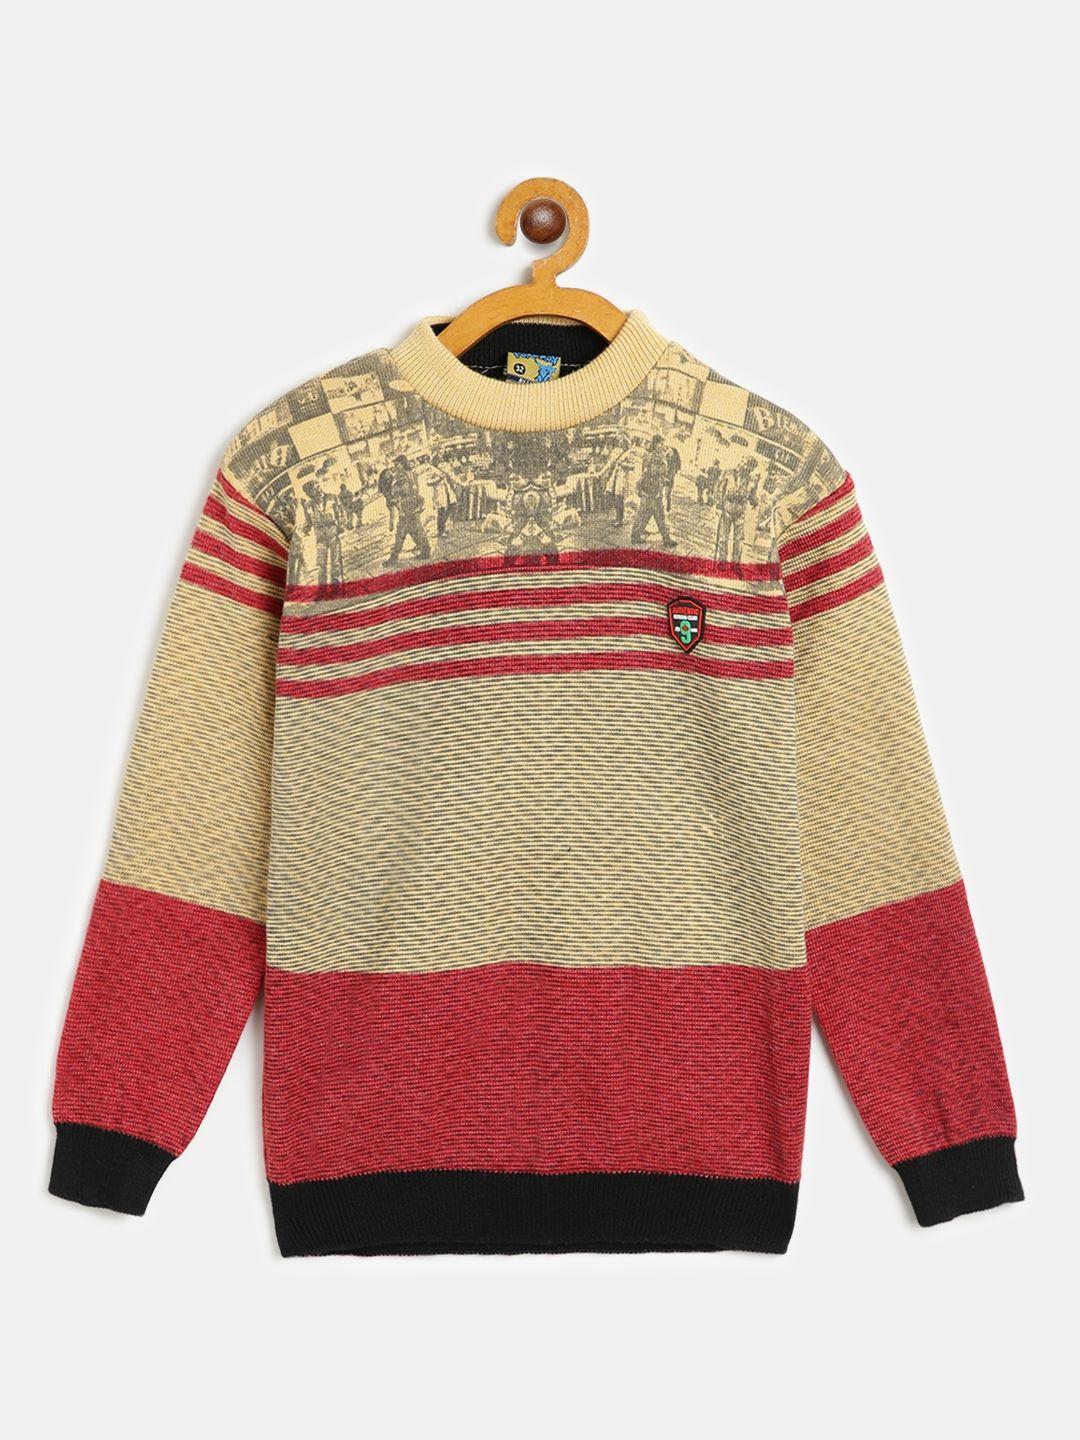 ad & av boys mustard yellow & red woollen chevron & graphic print pullover